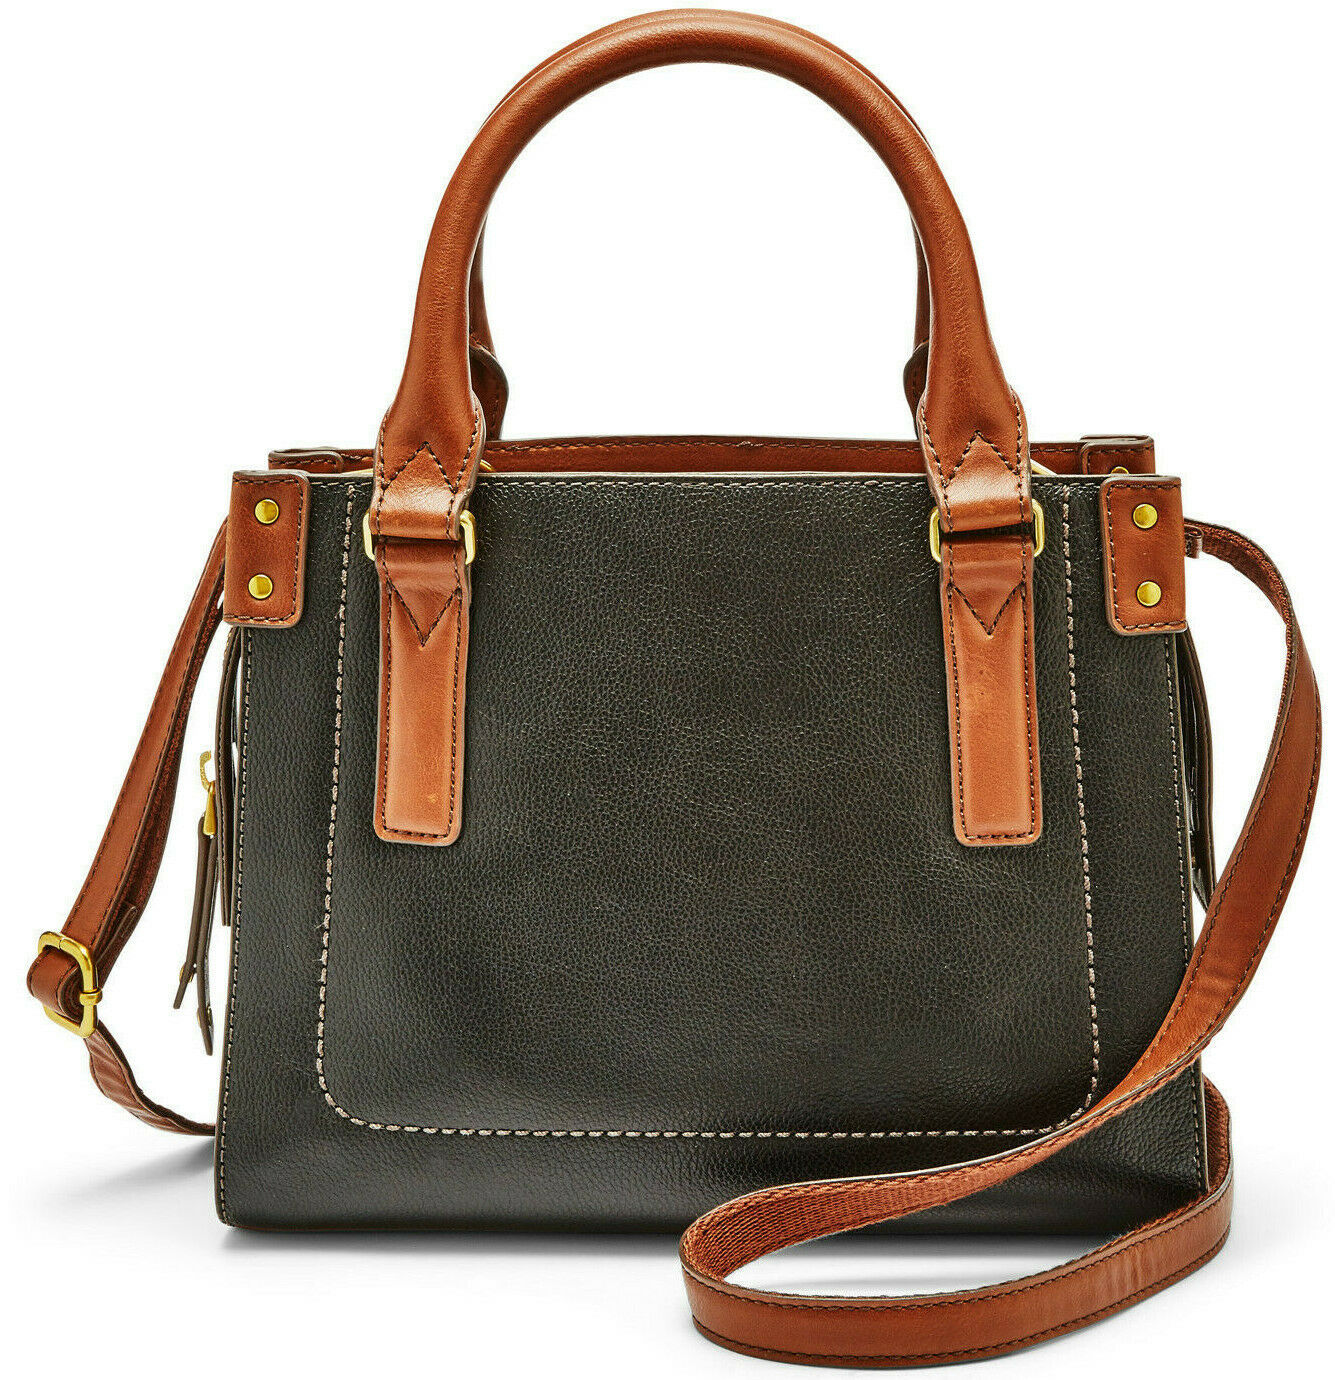 Fossil Claire Black Leather Mini Satchel Crossbody Handbag SHB2025001 NWT $198